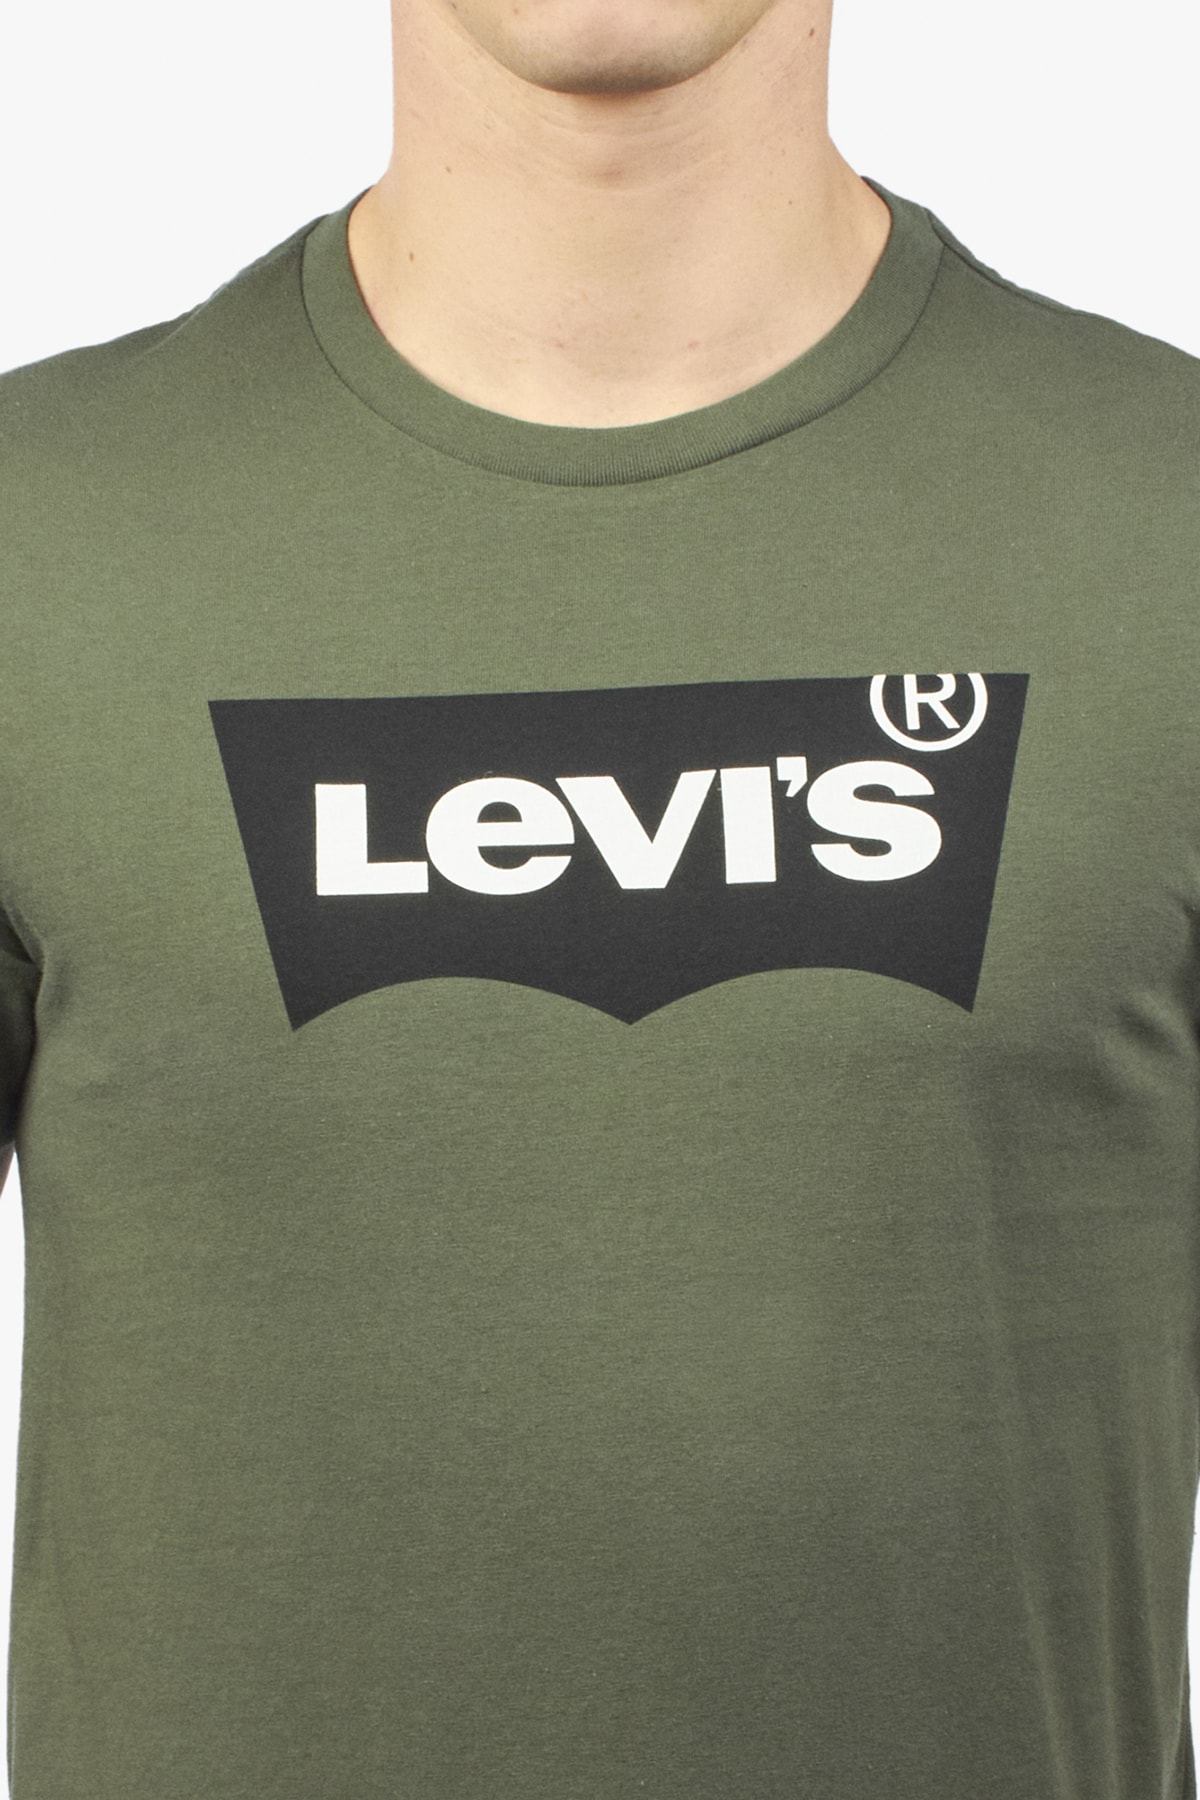 Levi's T-Shirt Grün Slim Fit Fast ausverkauft